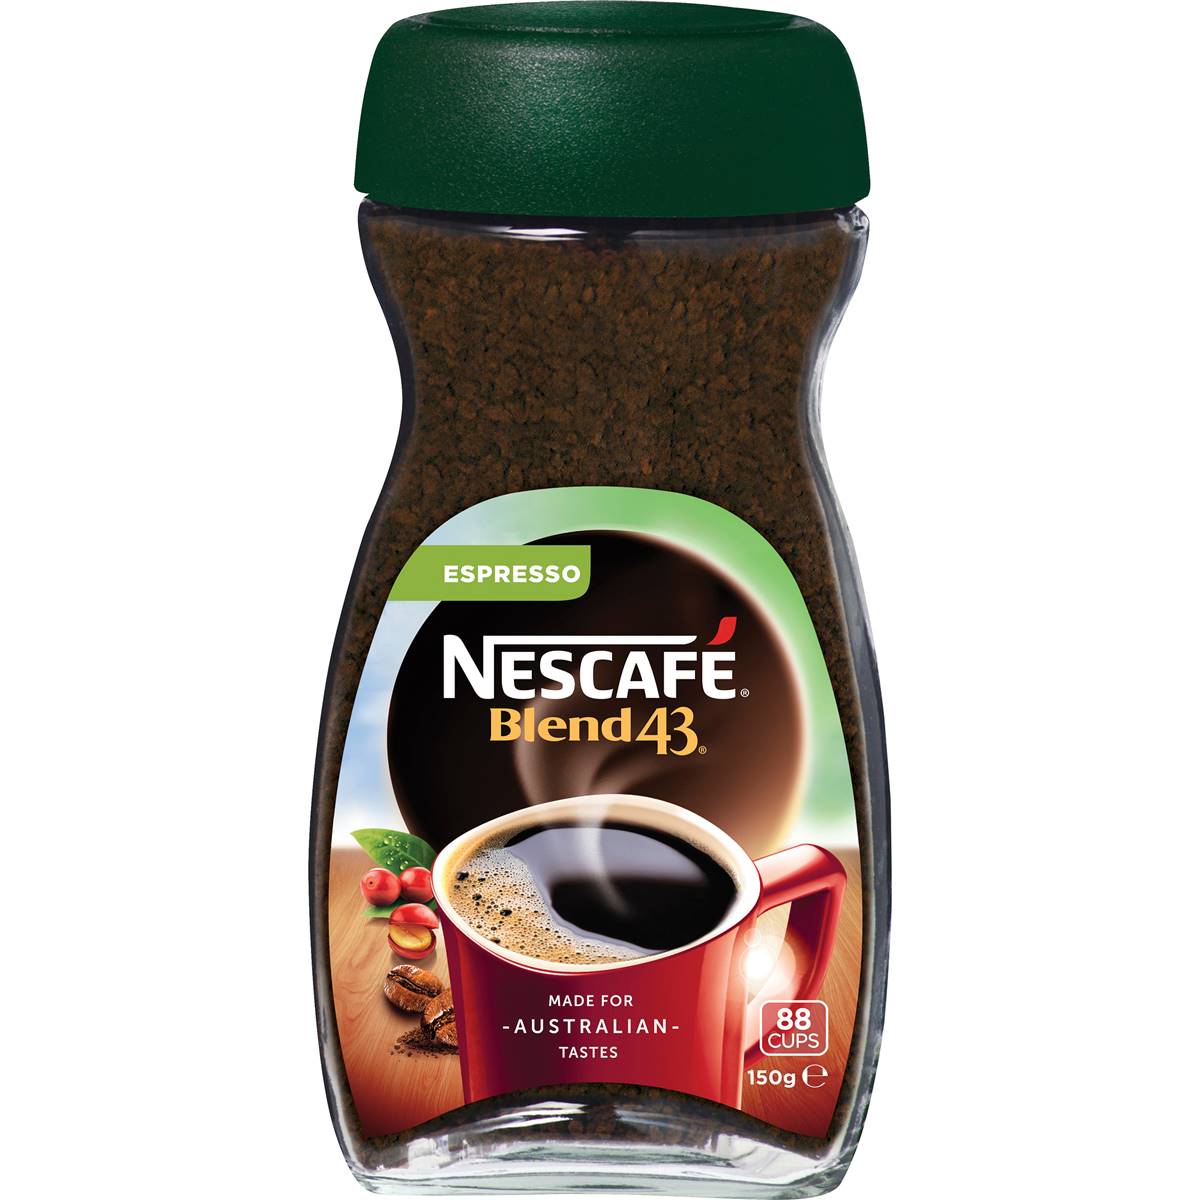 Nescafe Espresso Blend 43 Instant Coffee (Australia Imported) เนสกาแฟ เอสเพรสโซ เบลนด์ 43 กาแฟนำเข้า 250g.